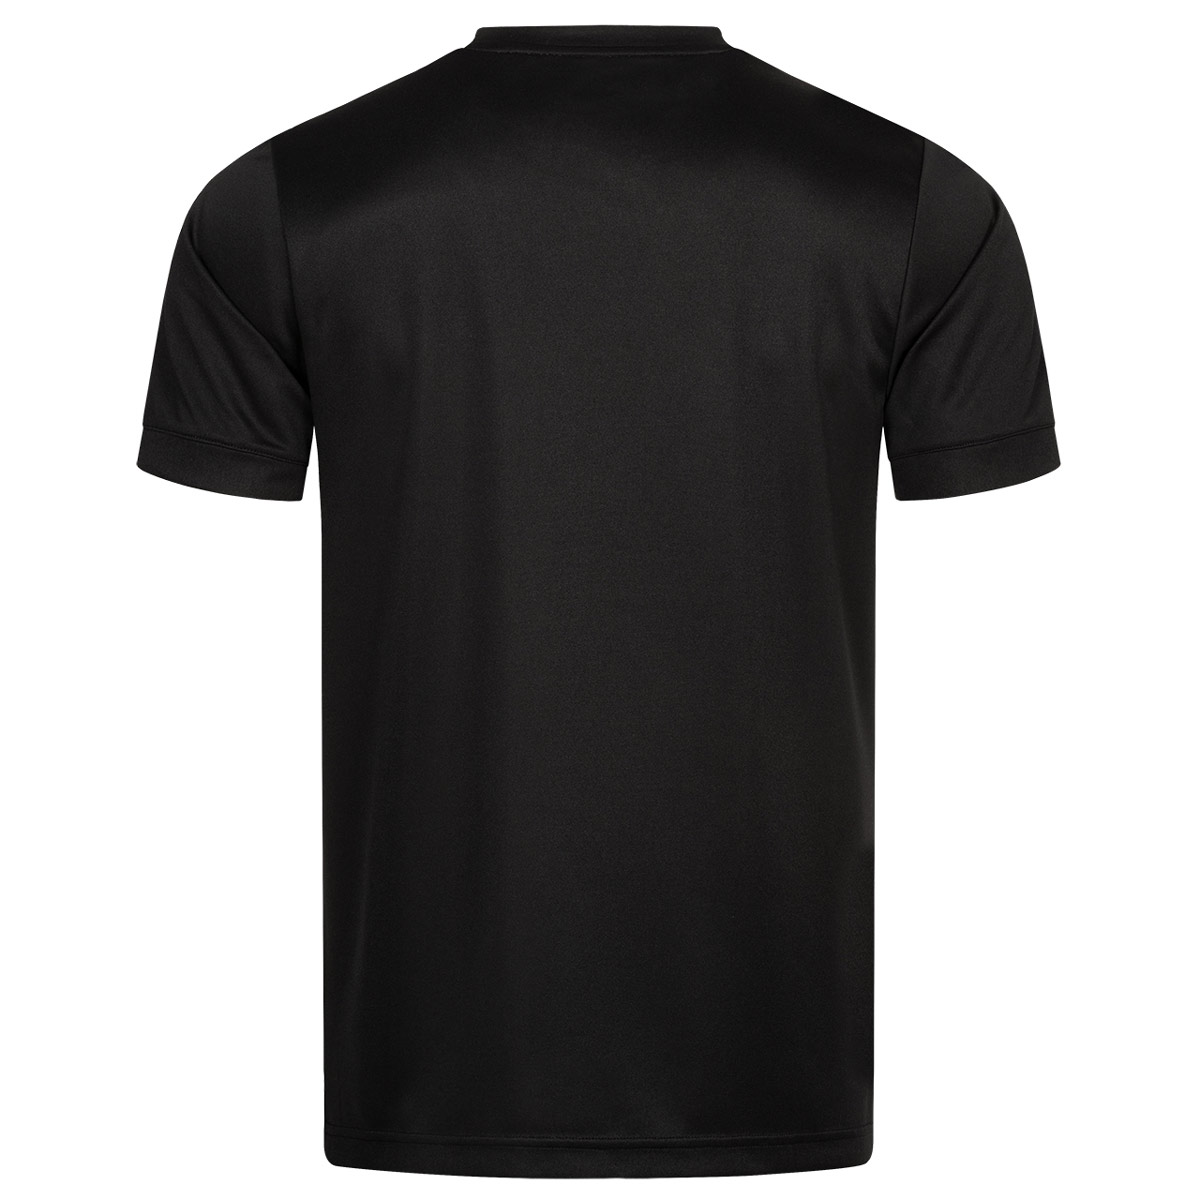 Donic T-Shirt Sting schwarz/grau S